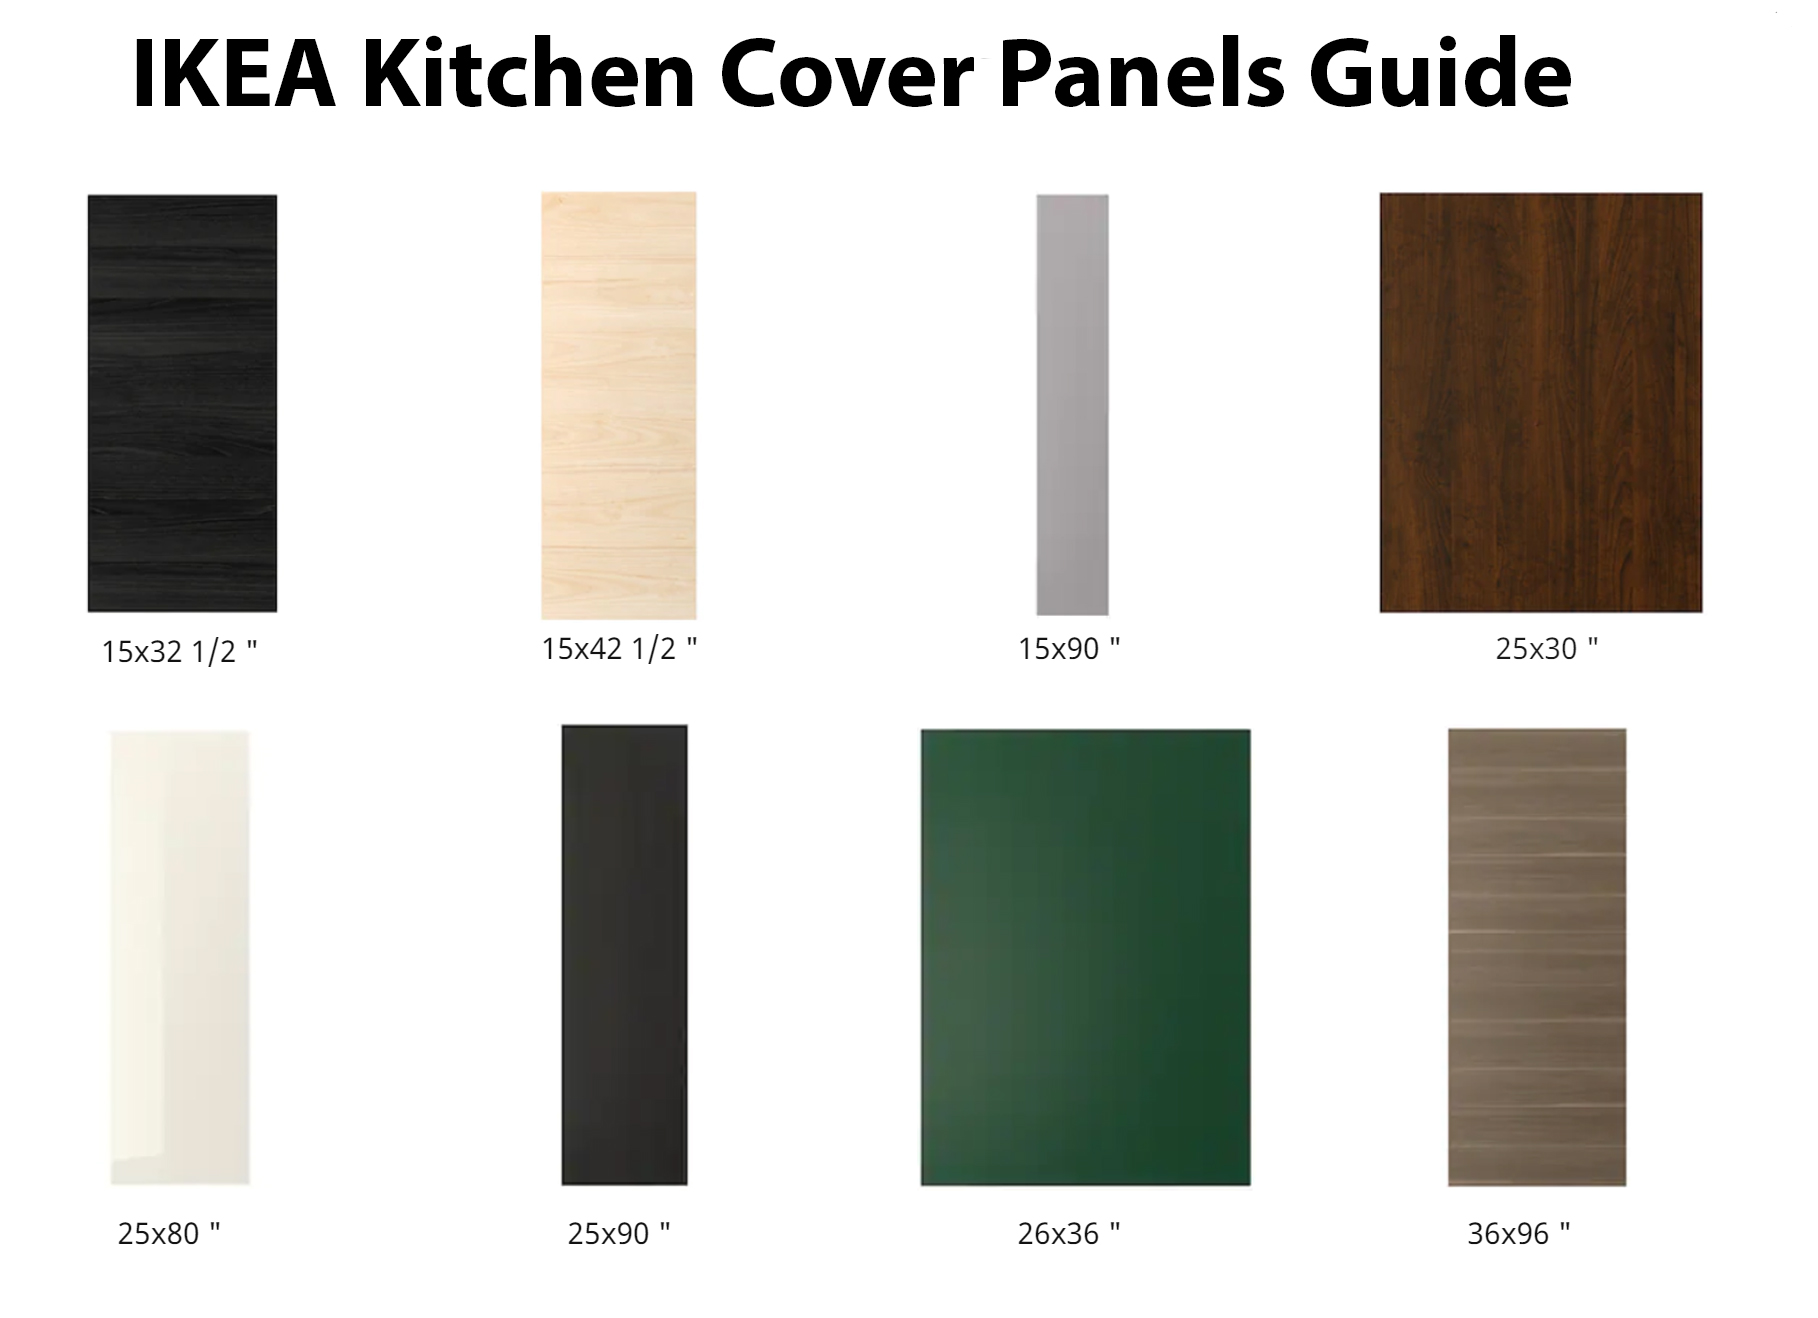 https://www.easyafford.ca/wp-content/uploads/2020/04/ikea-kitchen-cover-panels-guide.jpg